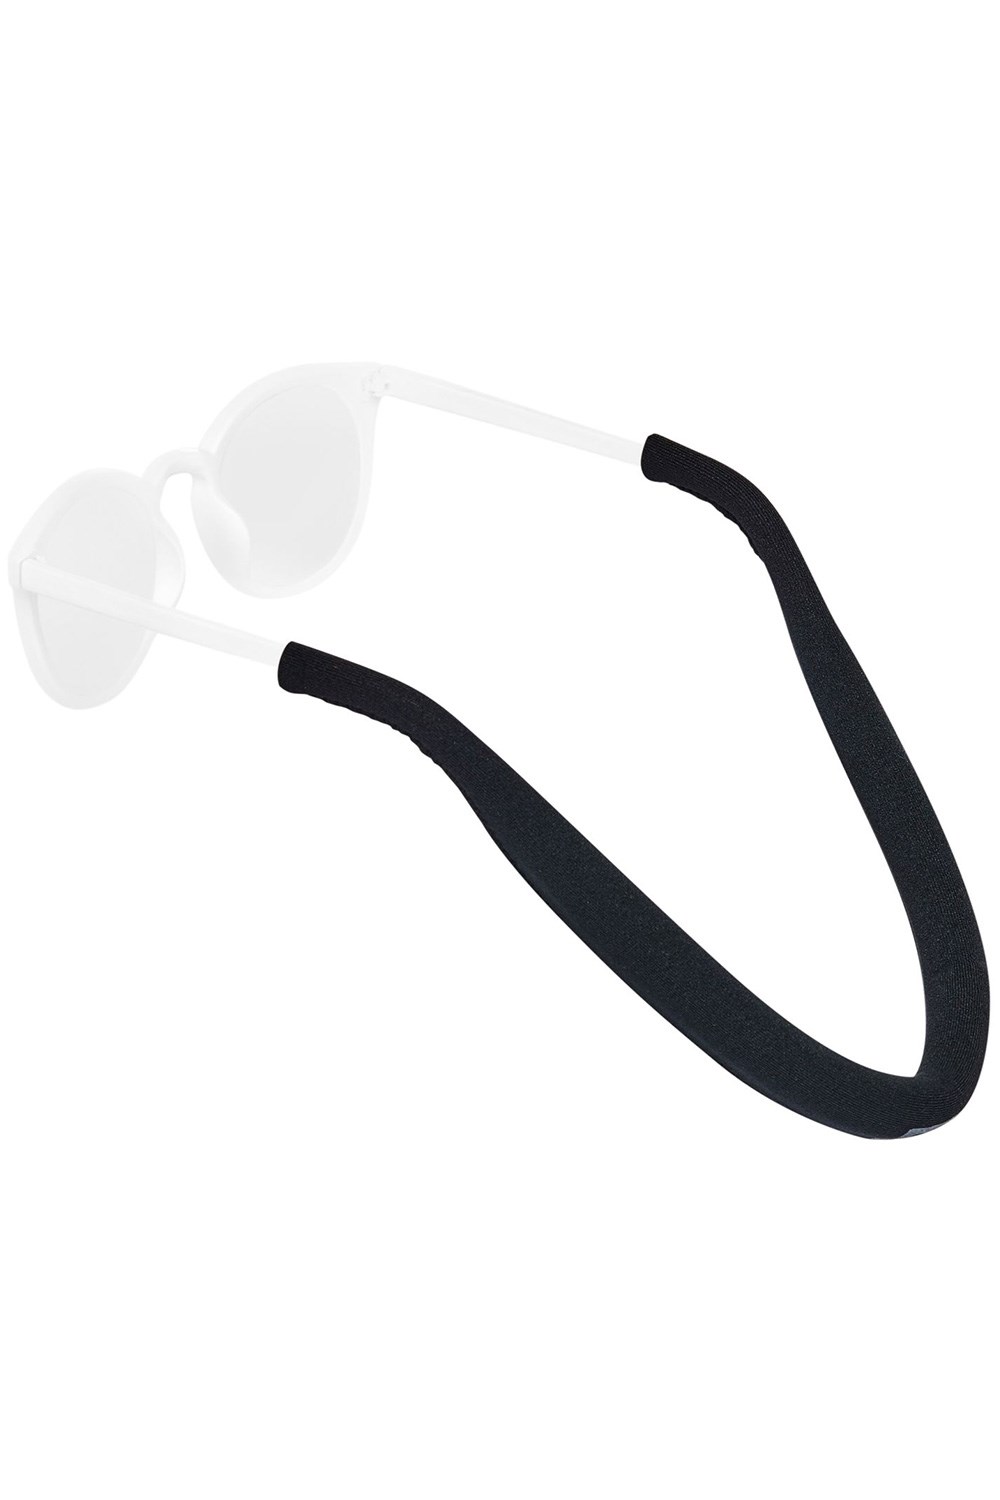 Floating Neo Eyewear Retainer -